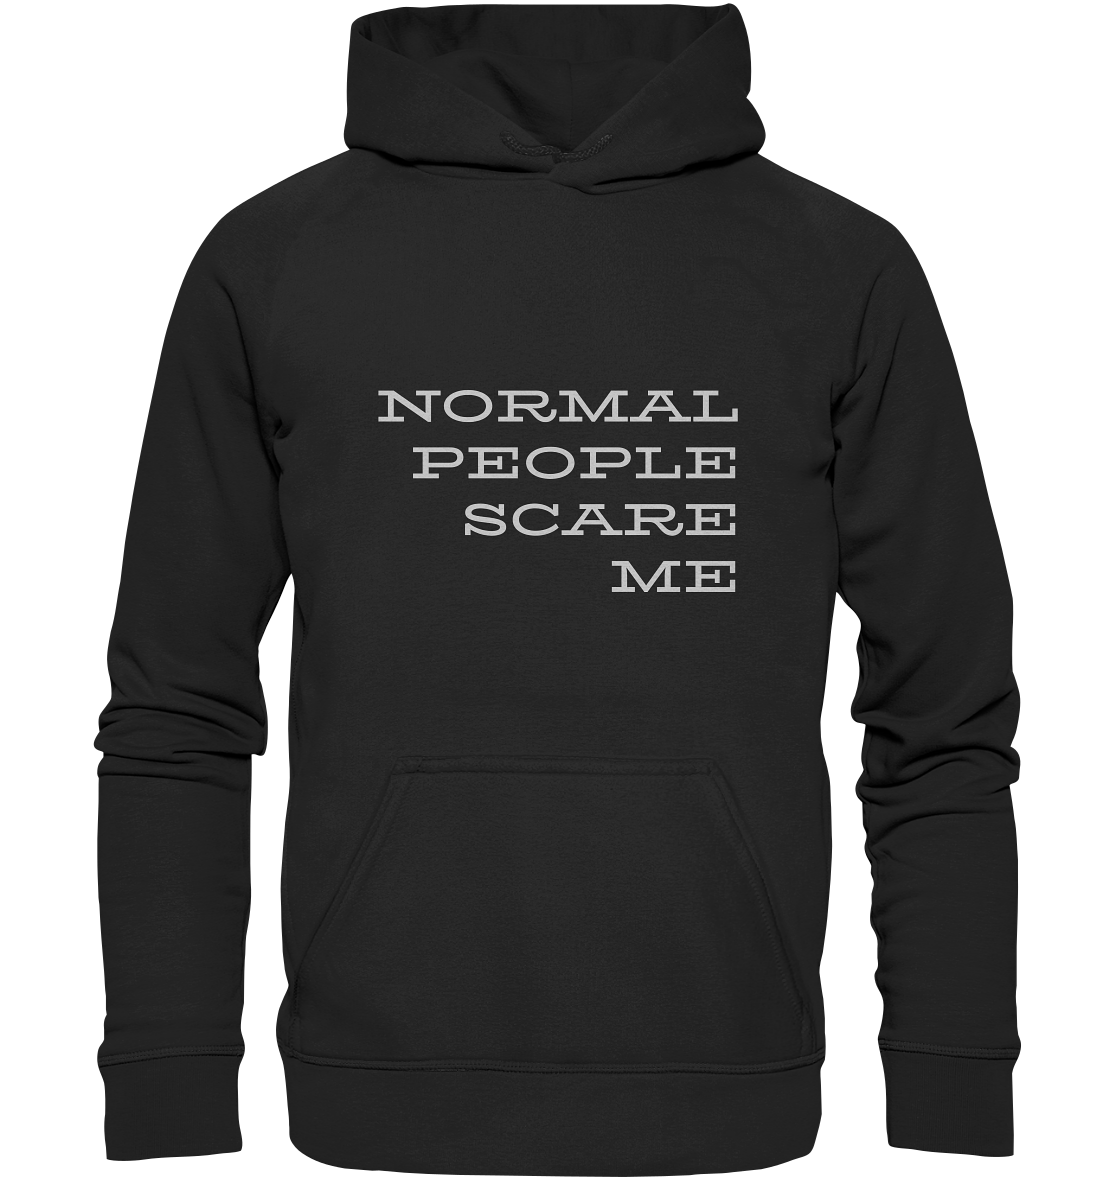 Hoodie mit Aufdruck "Normal people scare me", schwarz